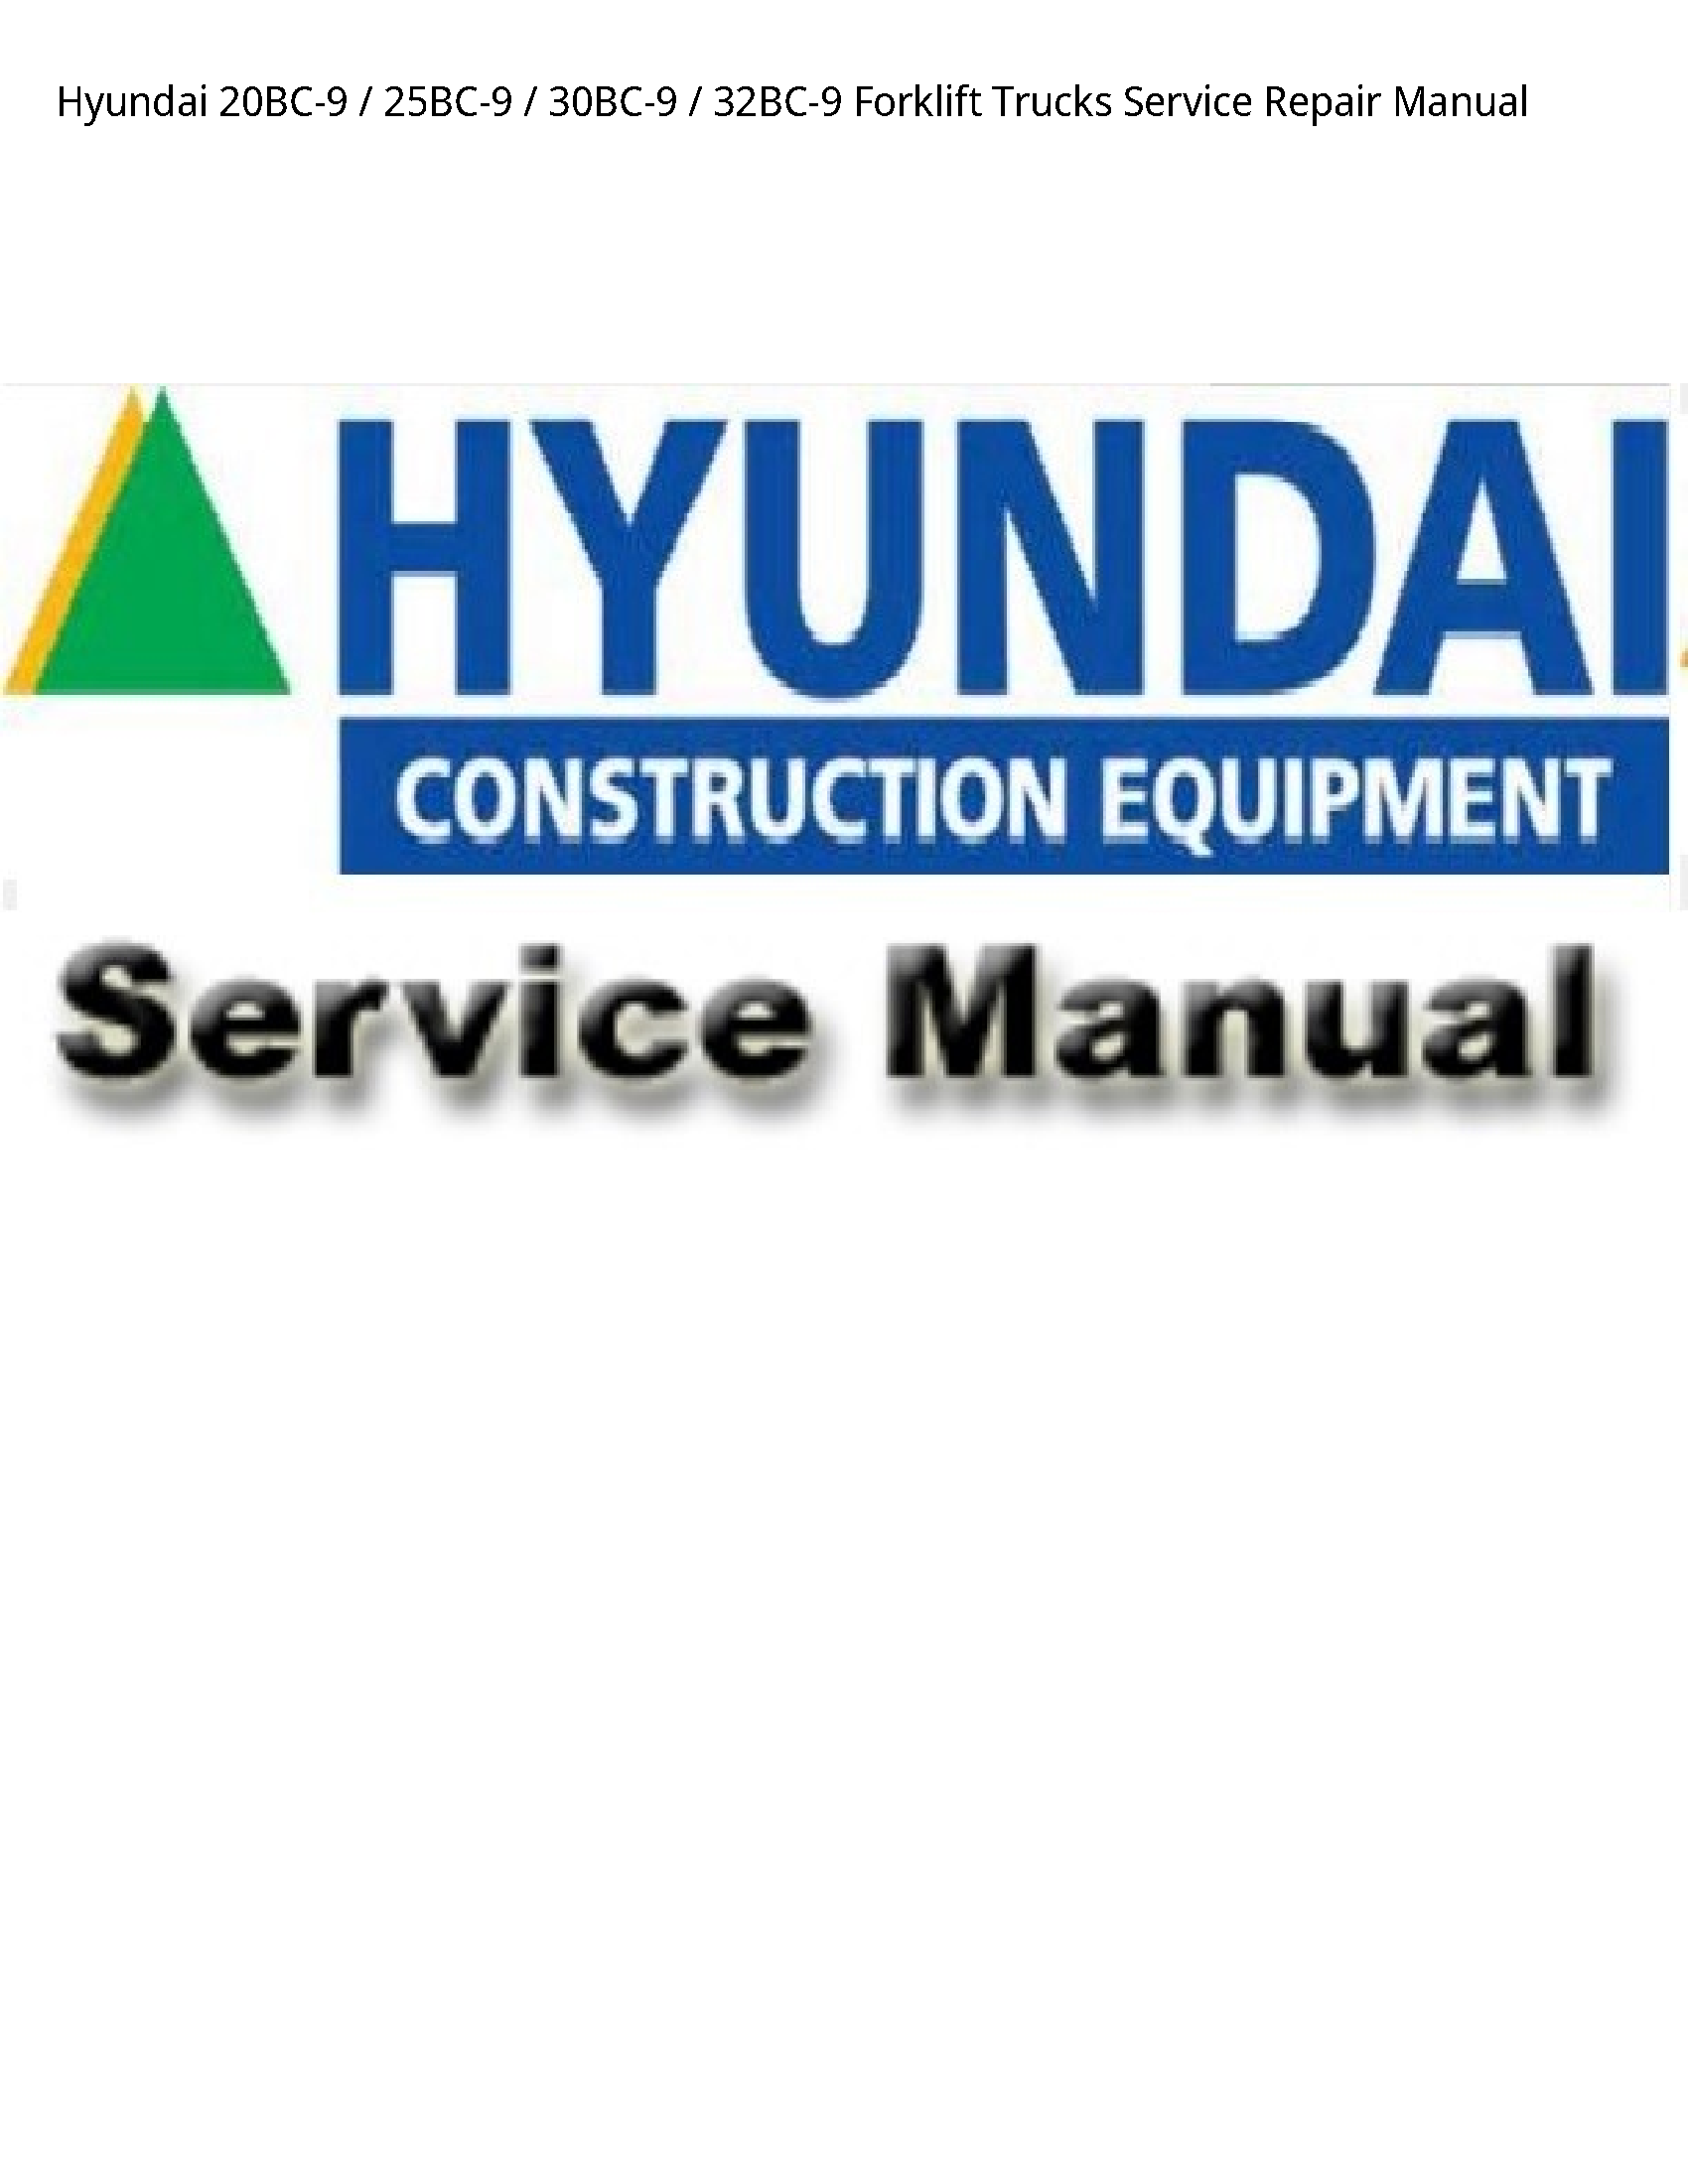 Hyundai 20BC-9 Forklift Trucks manual